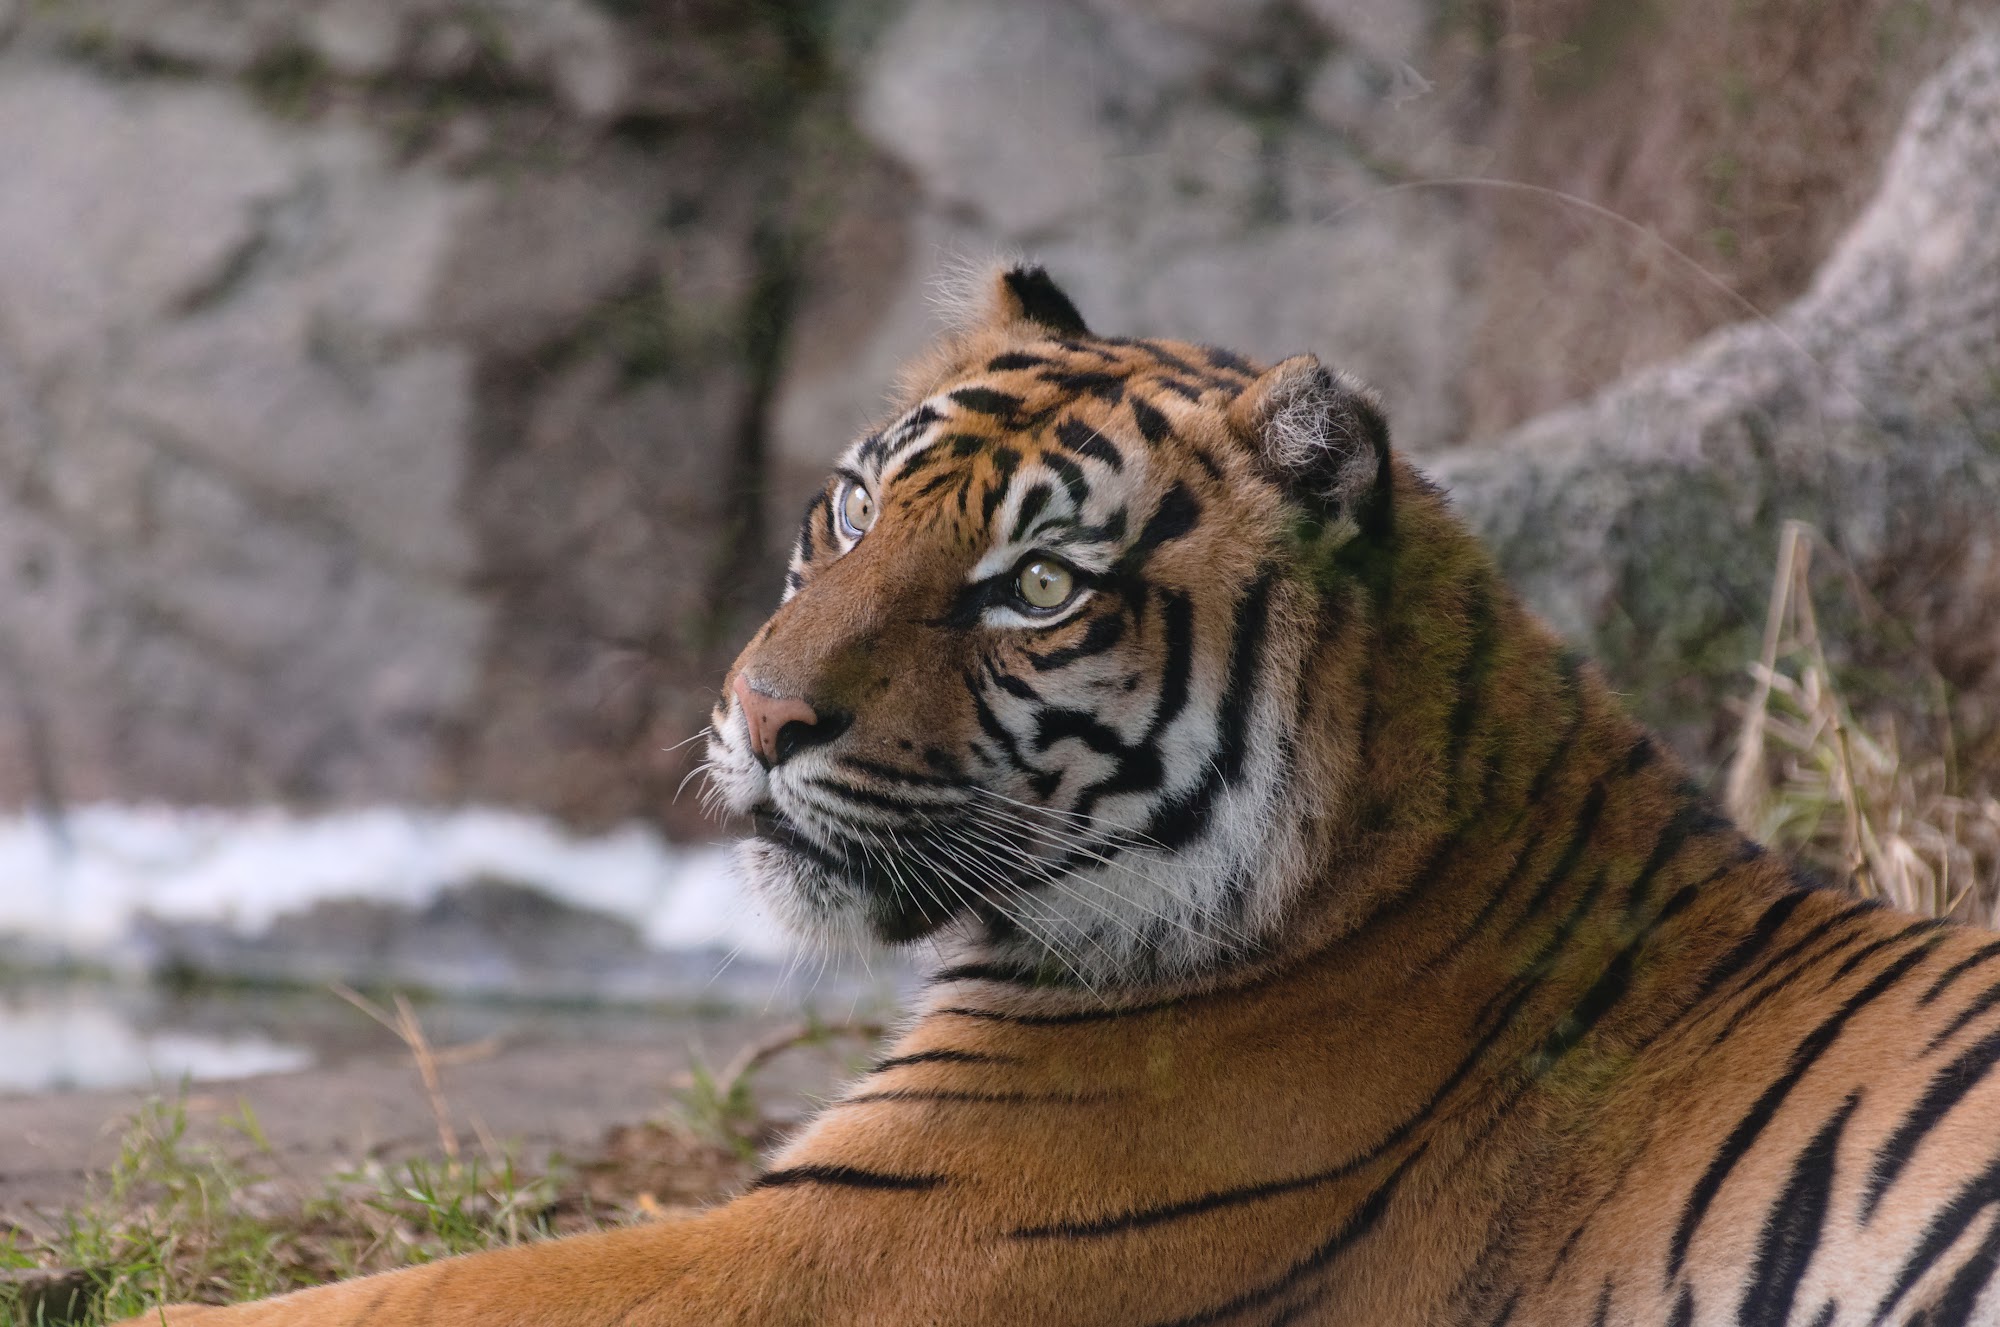 Pensive Tiger...